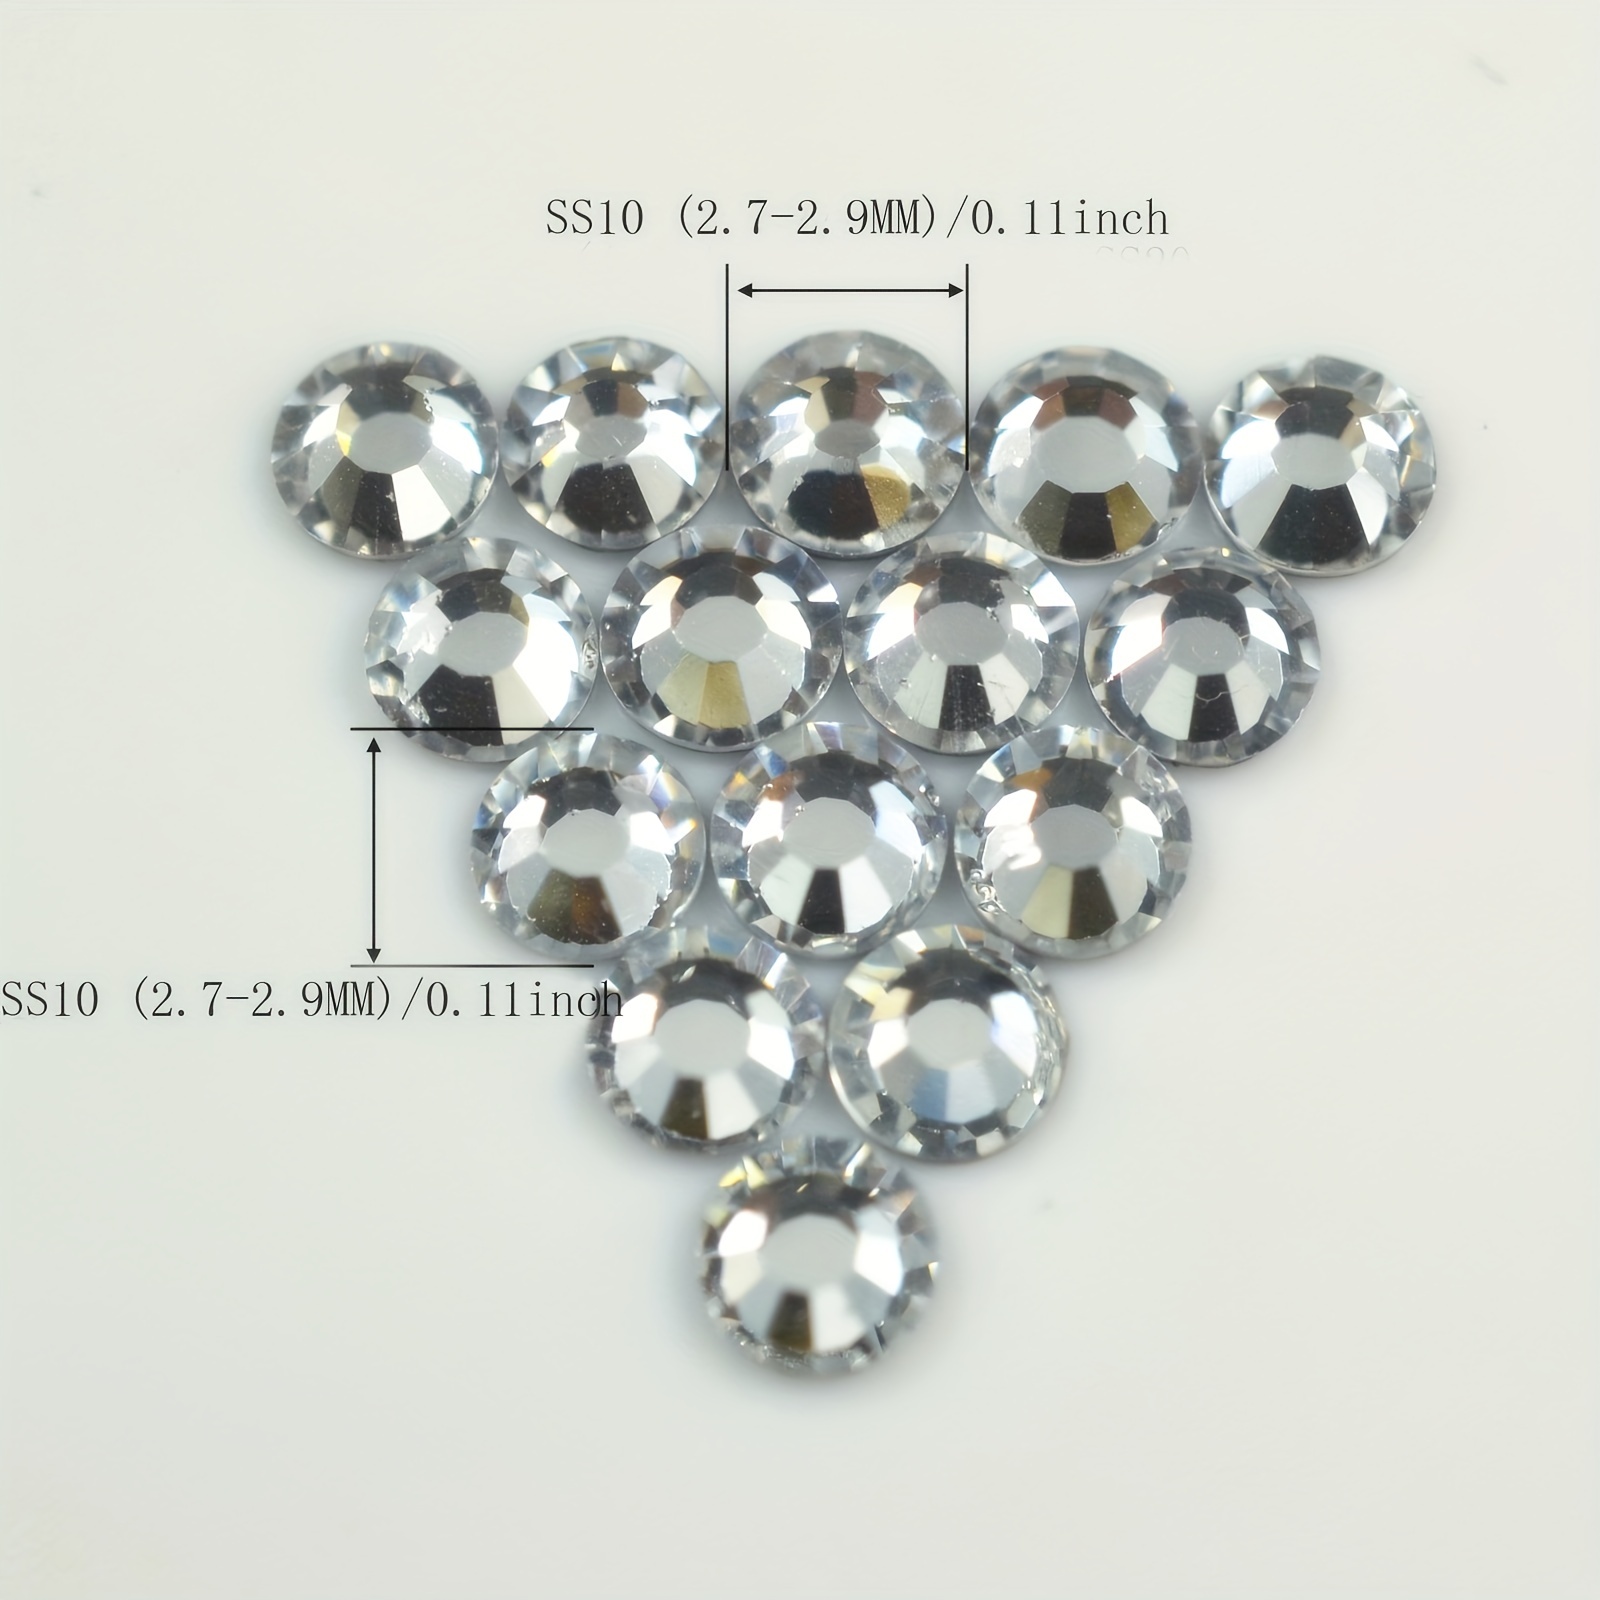  Beadsland Hotfix Rhinestones, 1440pcs Flatback Crystal  Rhinestones for Crafts Clothes DIY Decorations, Light Siam AB, SS20,  4.6-4.8mm